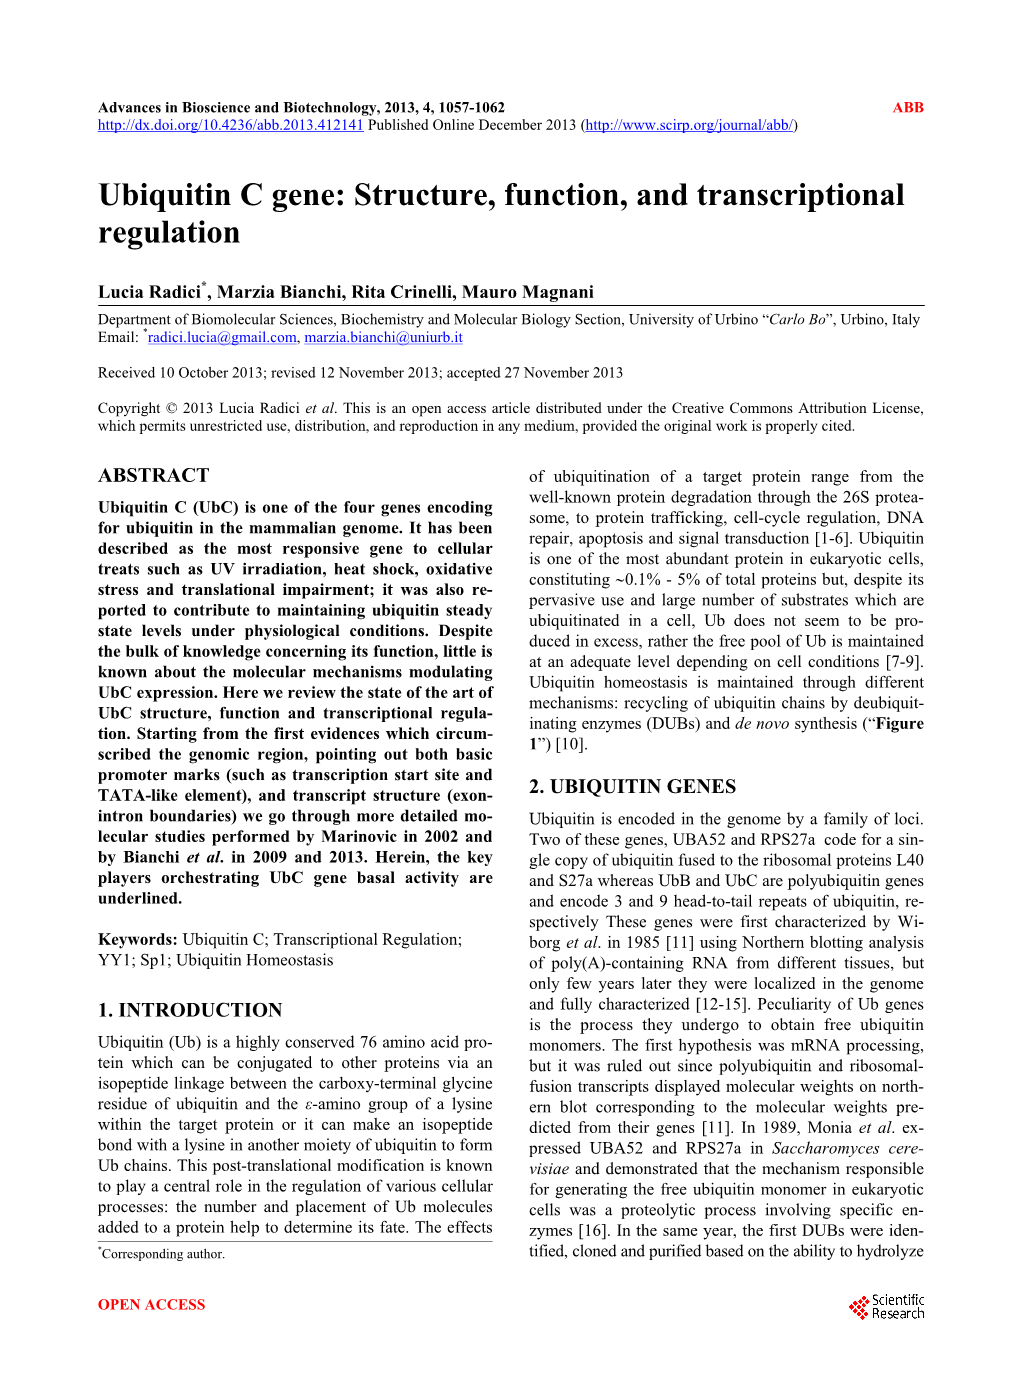 Ubiquitin C Gene: Structure, Function, and Transcriptional Regulation